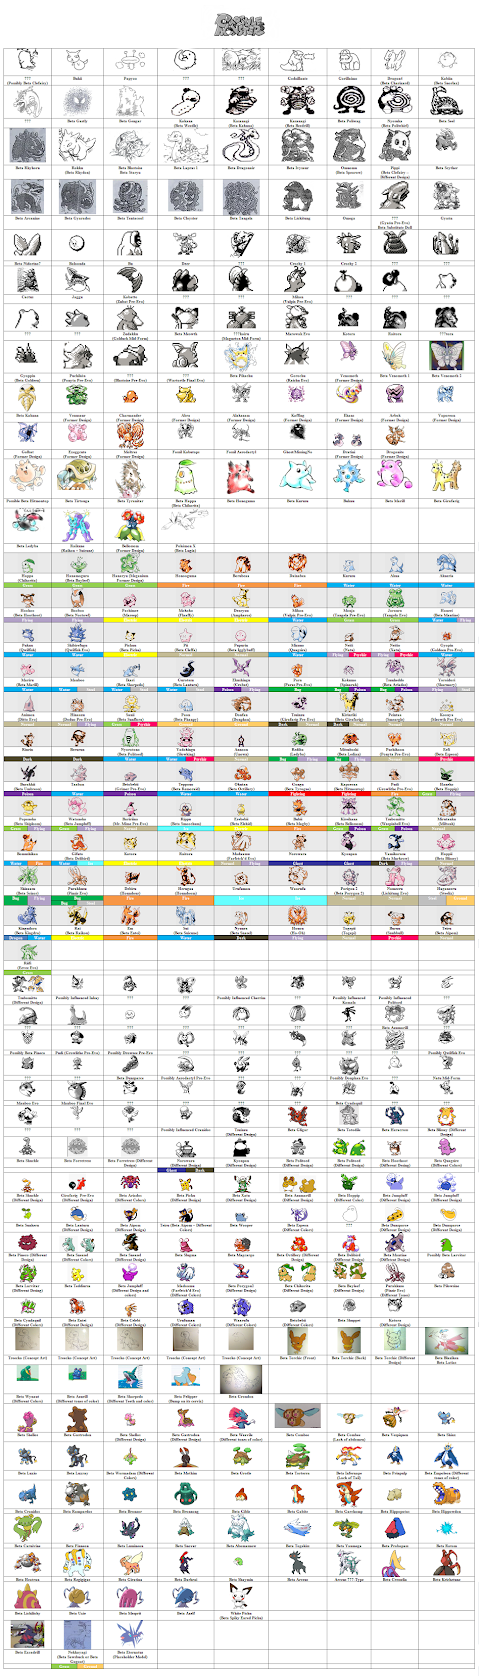 Pokémon Battle Master: Pokémon e Darwin - Evolução e Mew